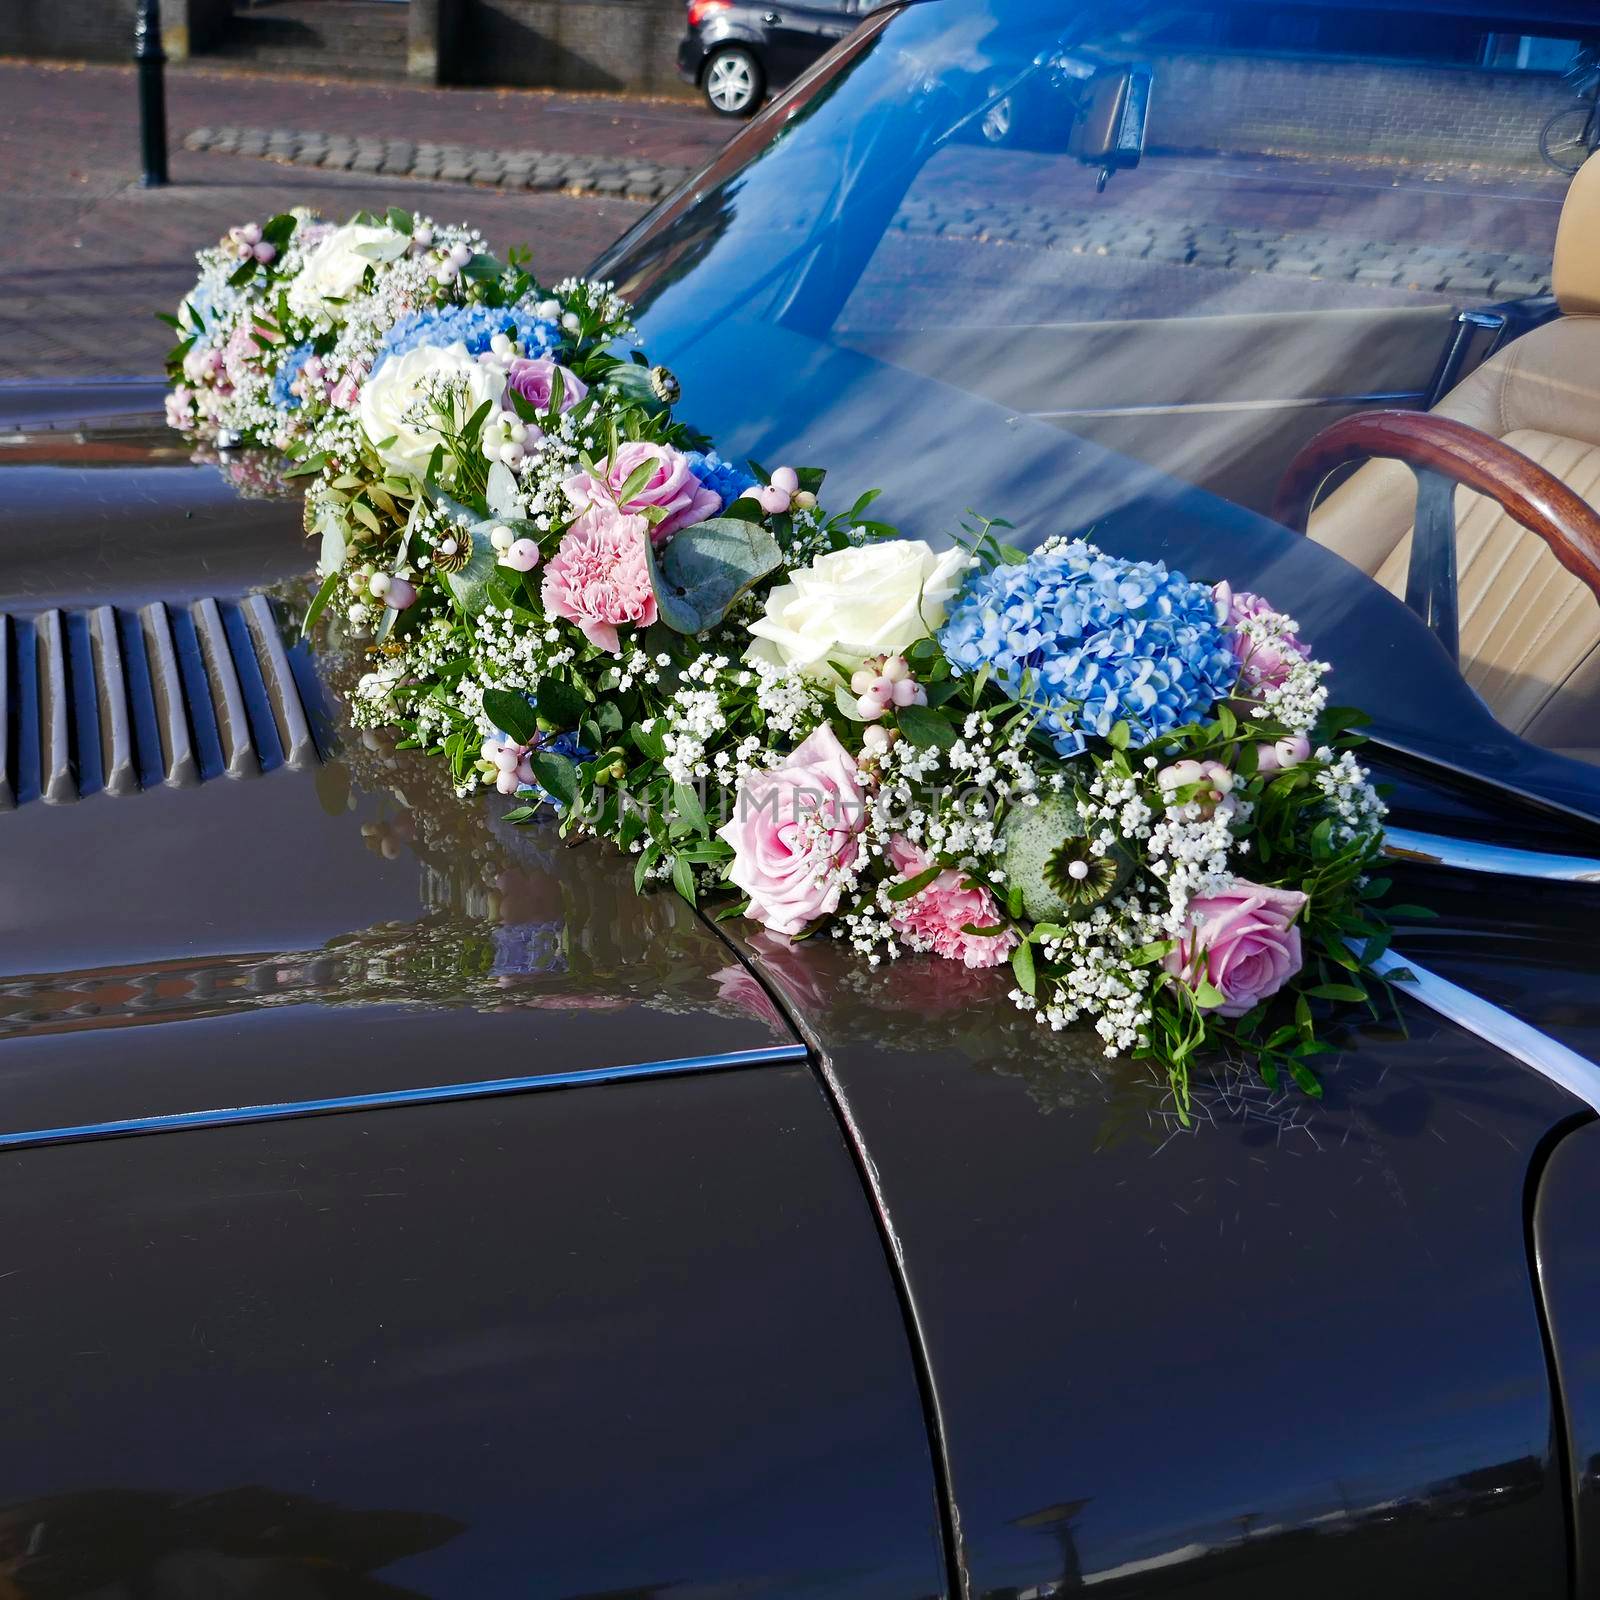 A wedding flower garland under the windshield by WielandTeixeira